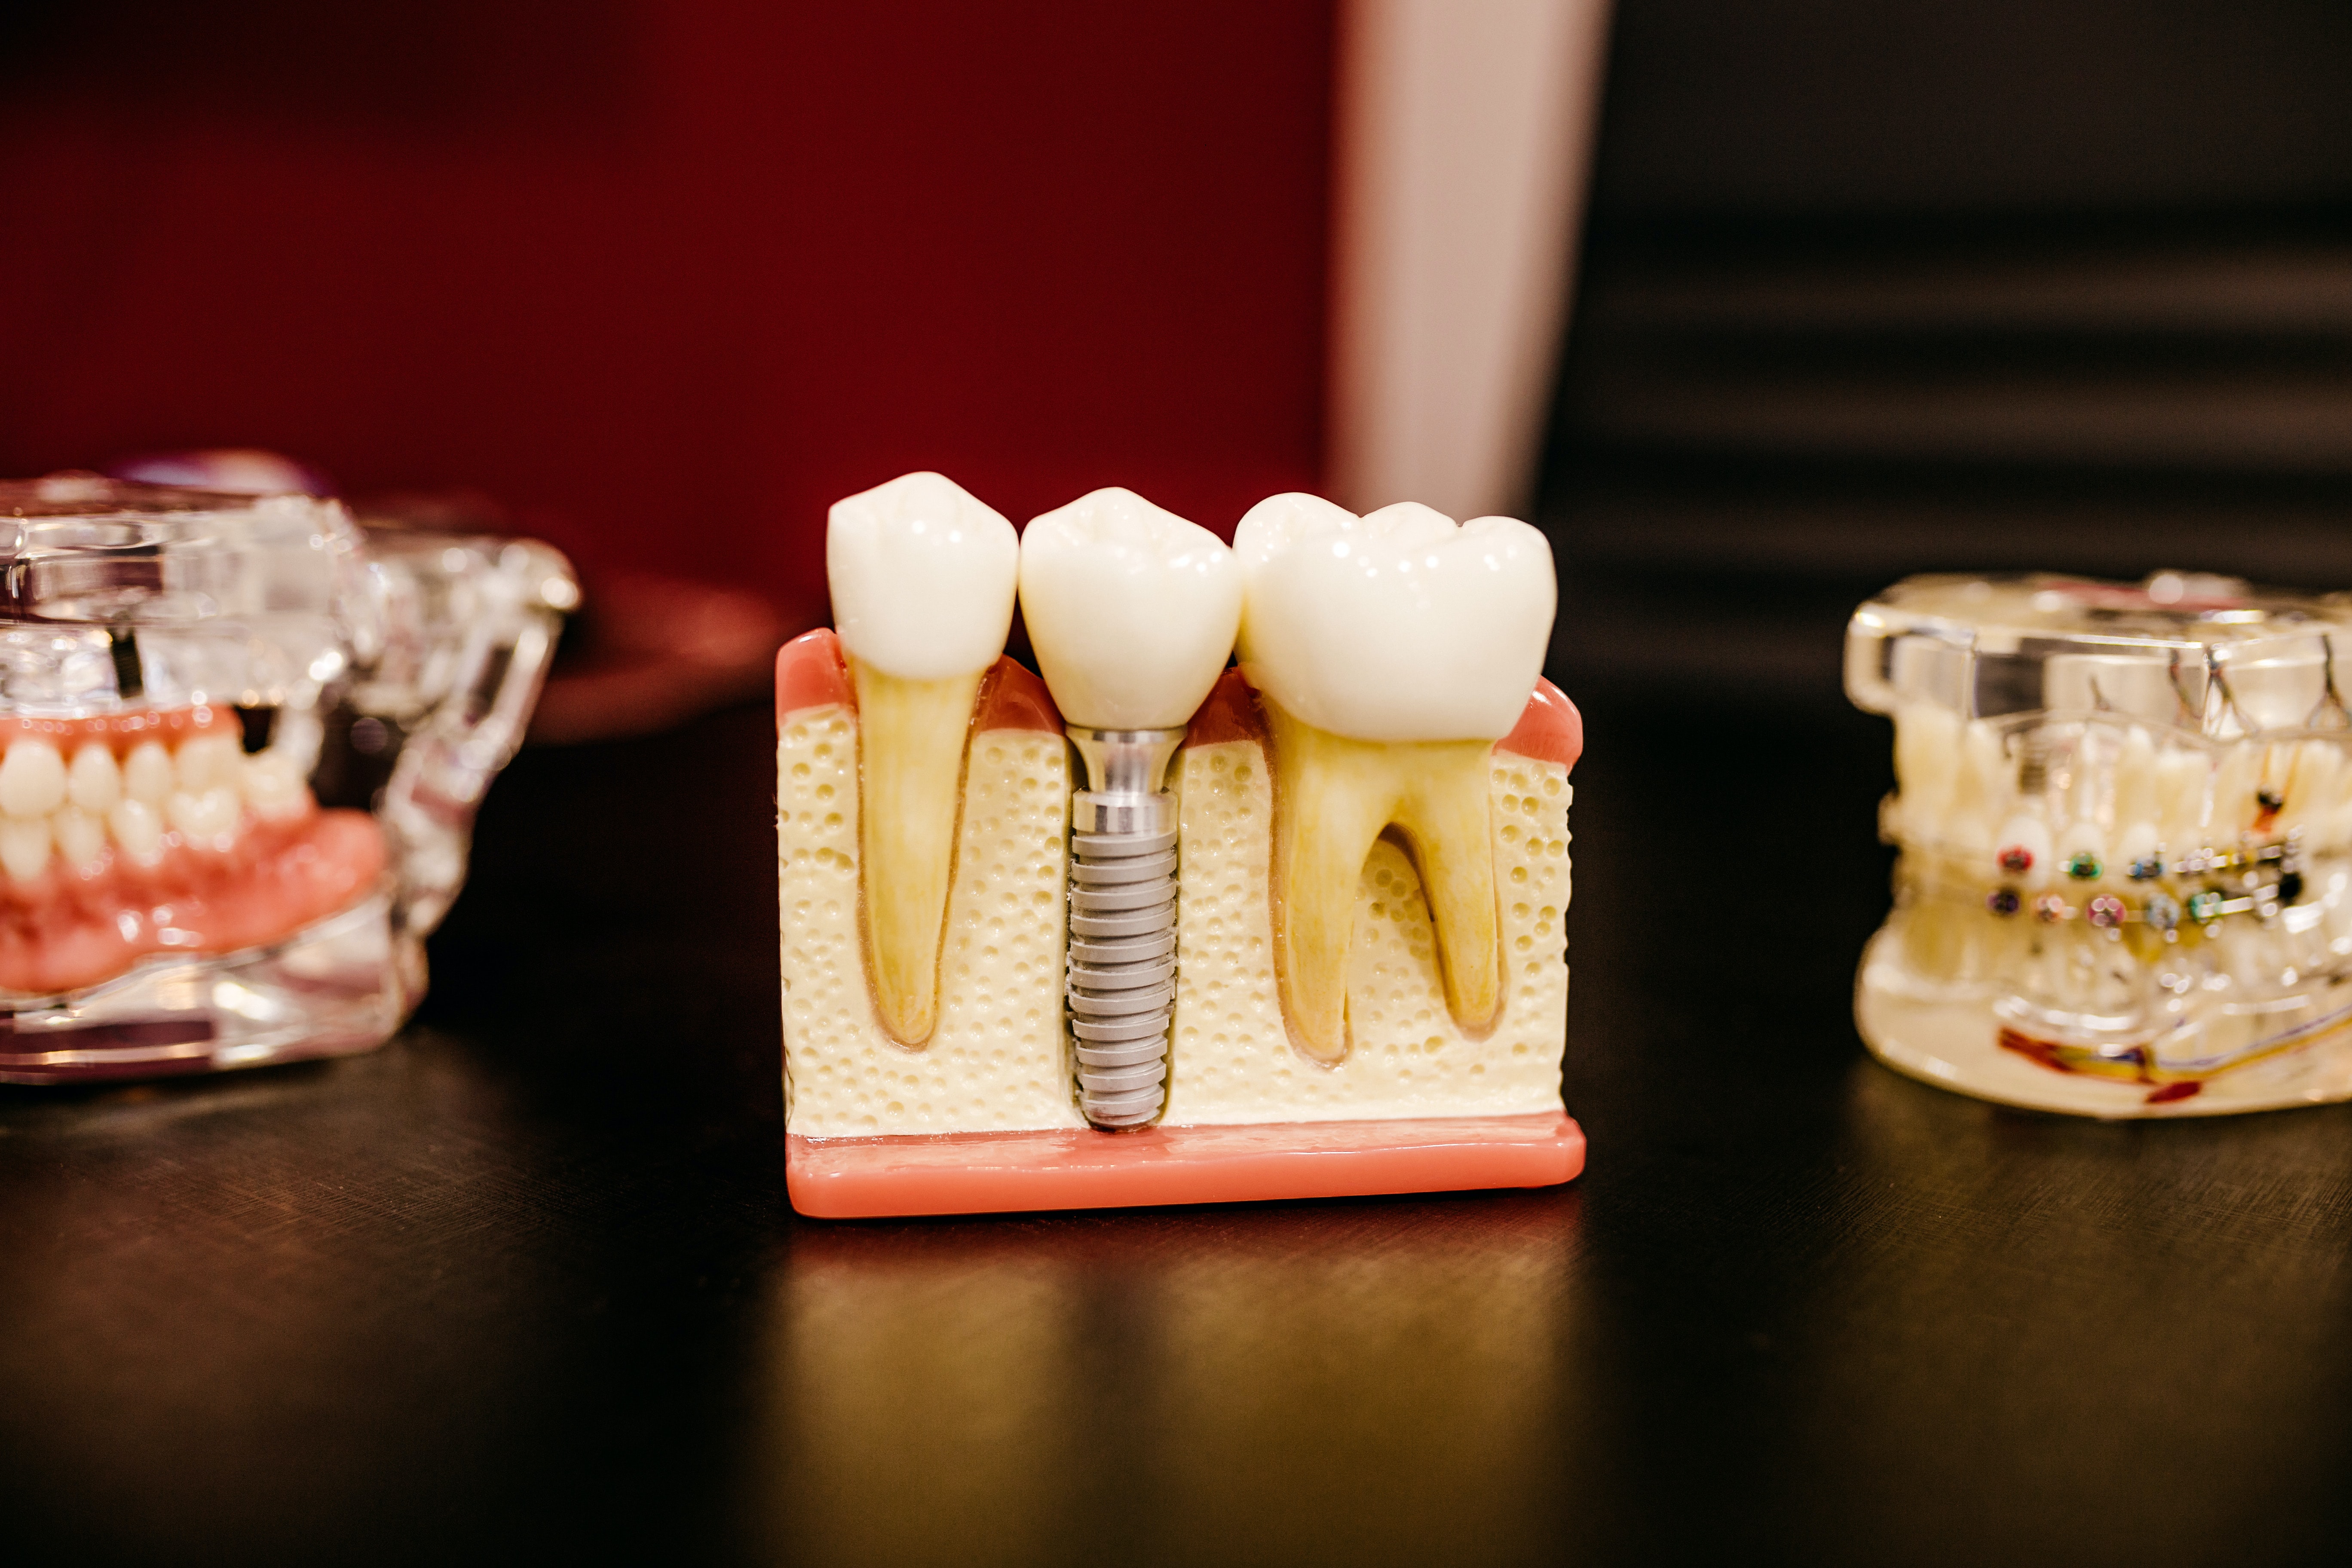 Photograph of Dental Implants model, Castle Rock, CO